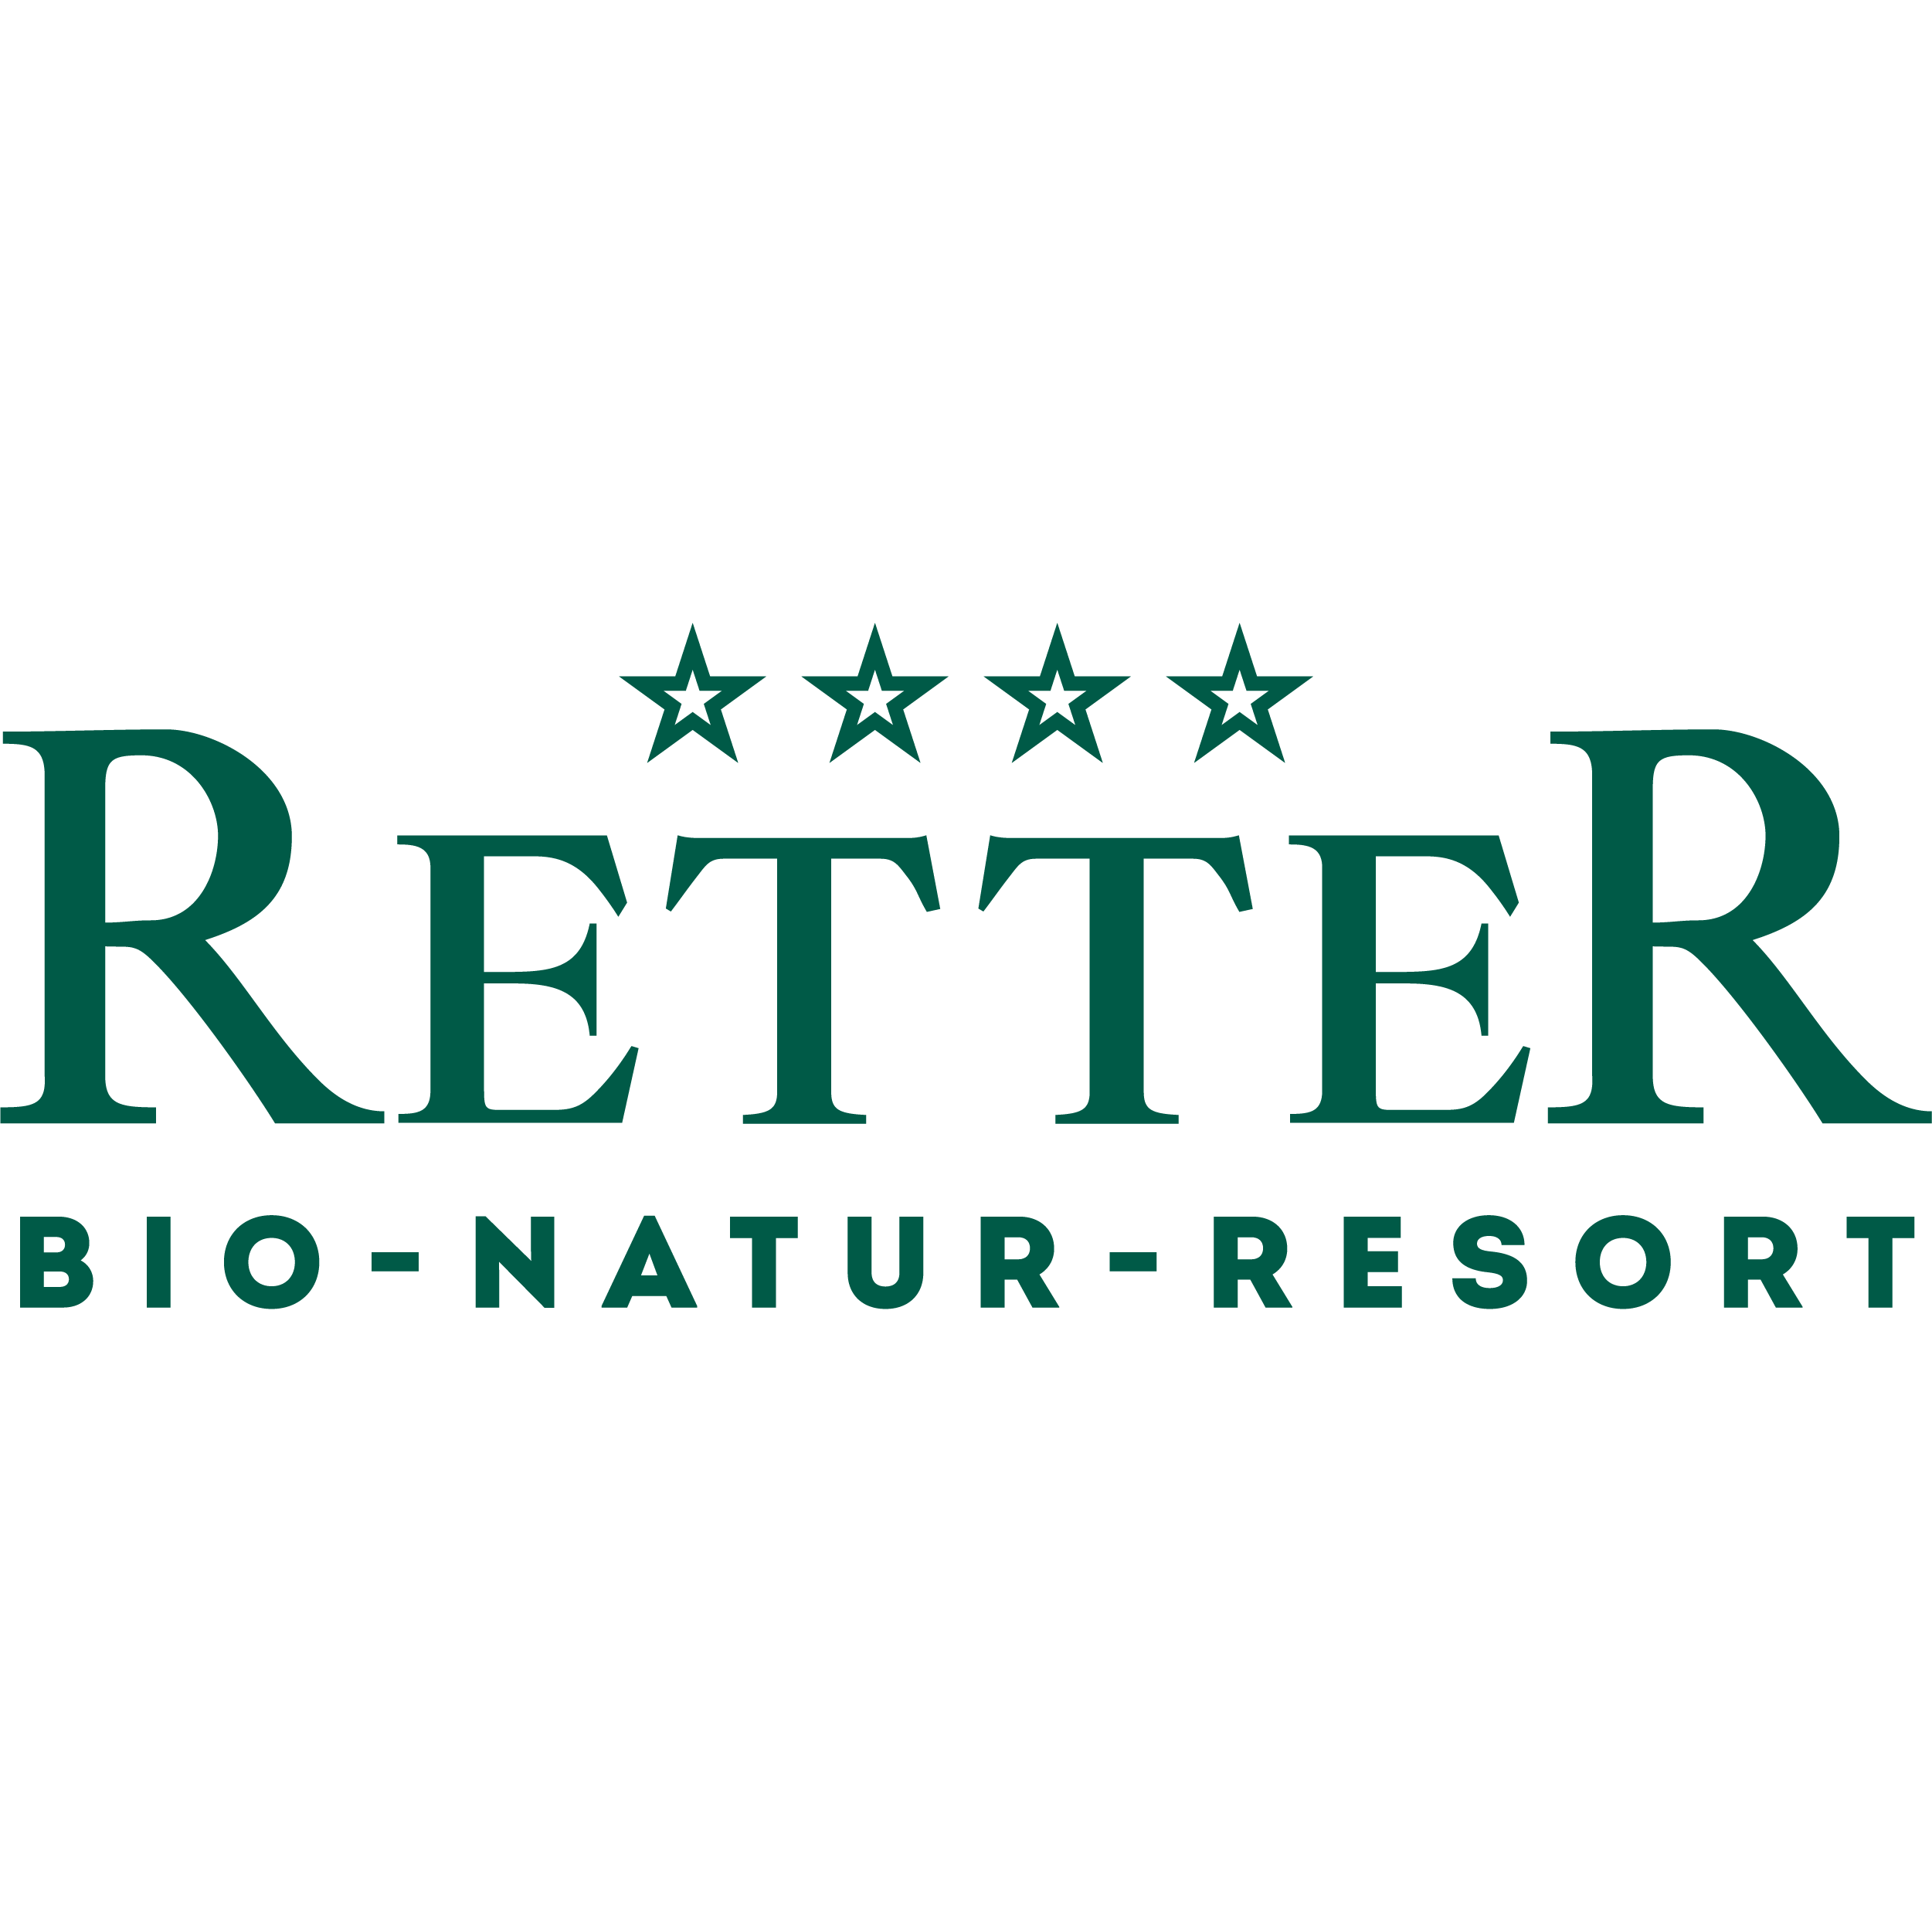 RETTER Bio-Natur-Resort Logo